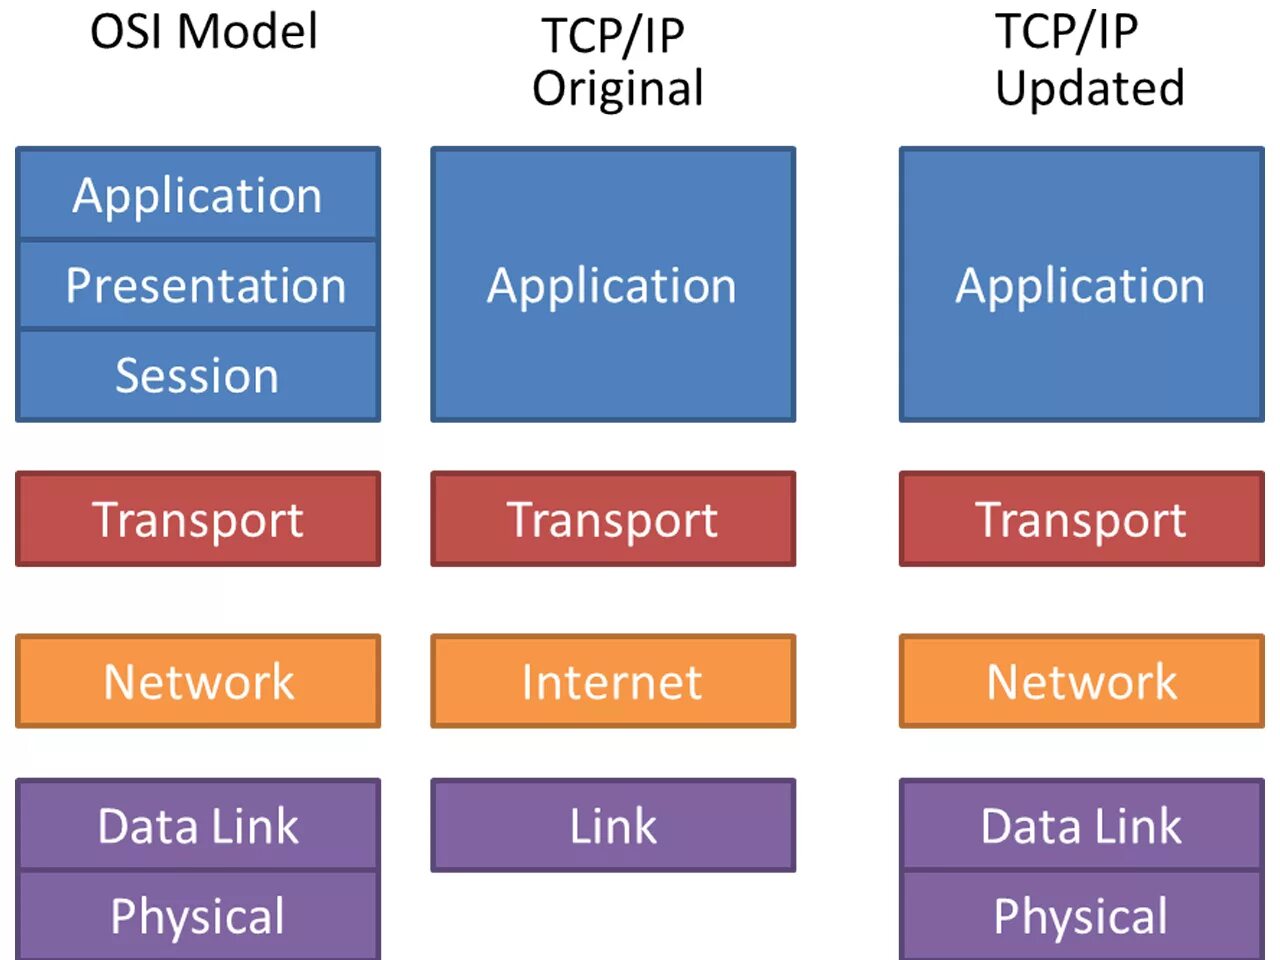 Ips update. Osi модель IP layer. Модель TCP IP. Стек TCP/IP osi. Модель osi и модель TCP/IP.